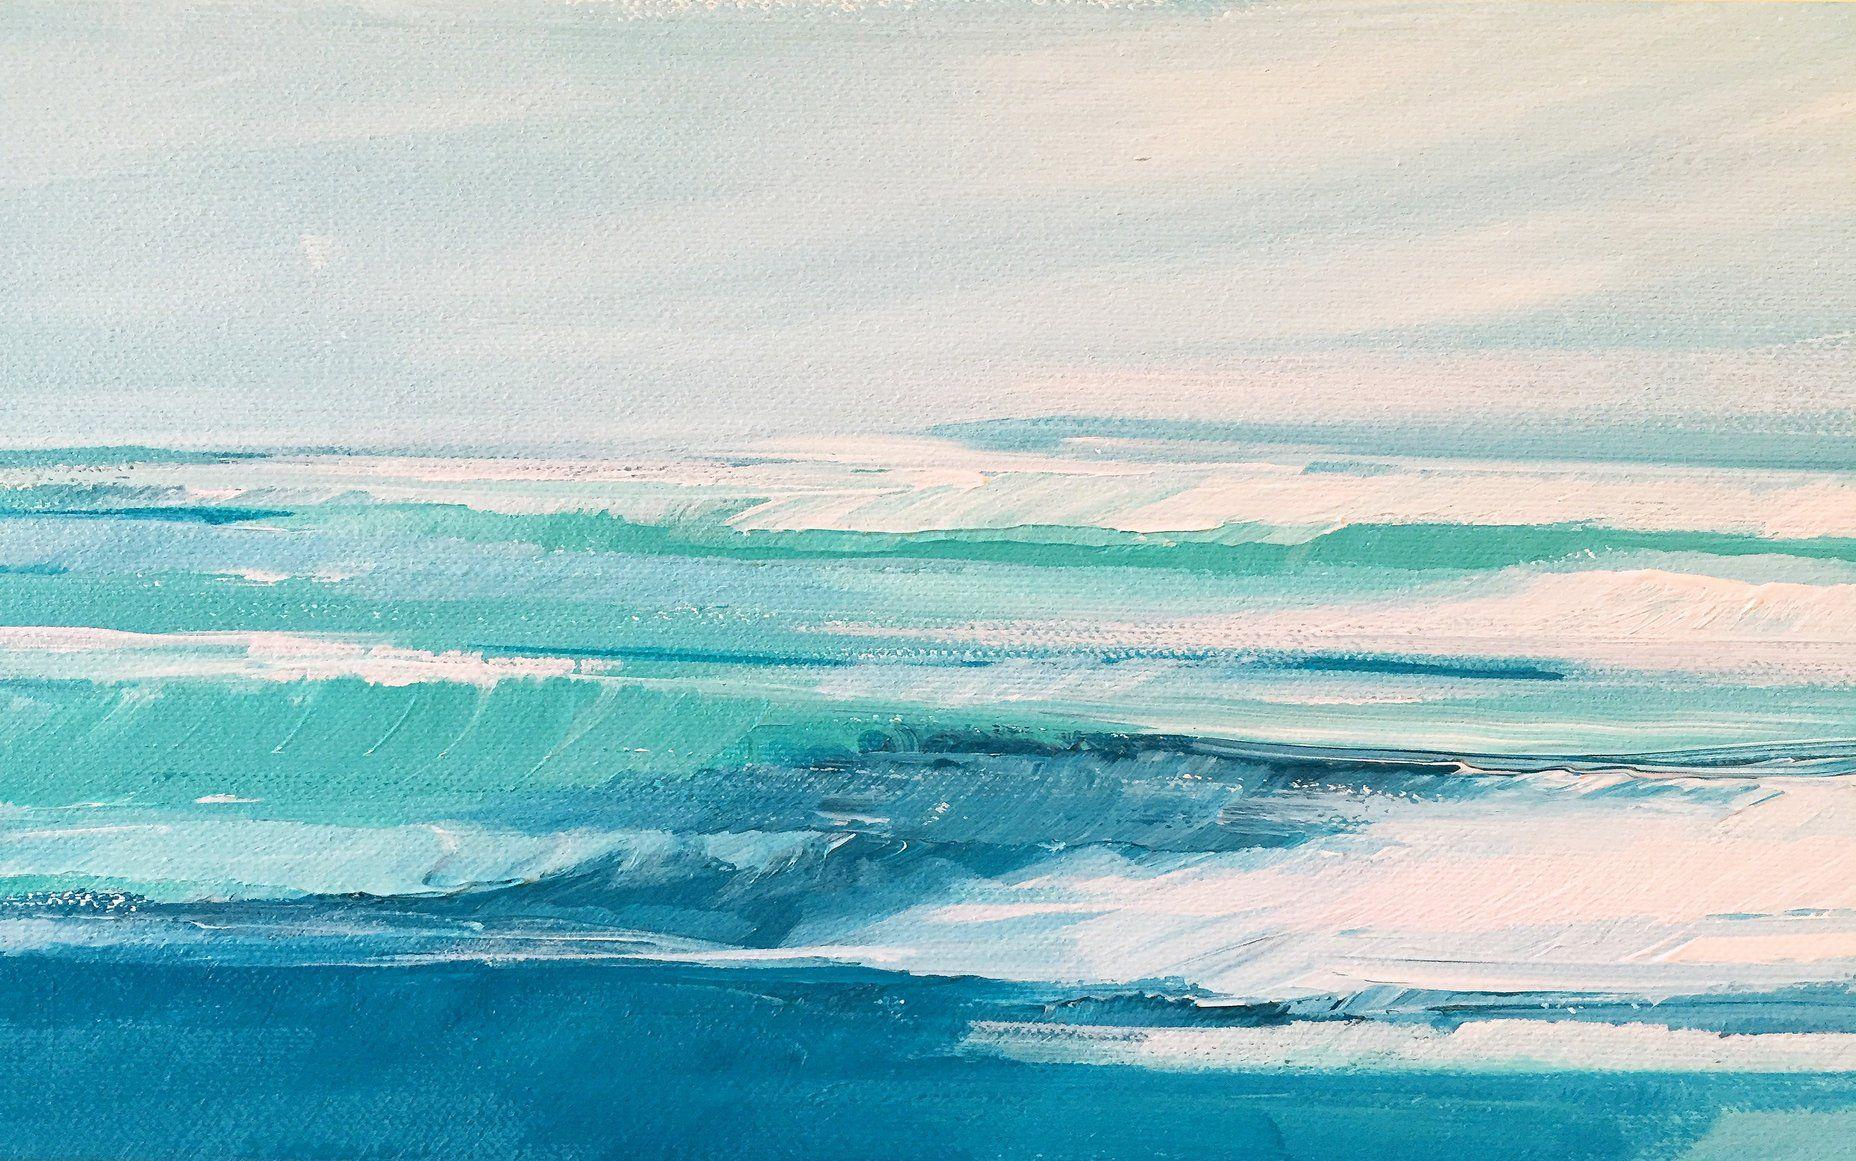 Ocean Painting Wallpapers - Top Free Ocean Painting Backgrounds ...